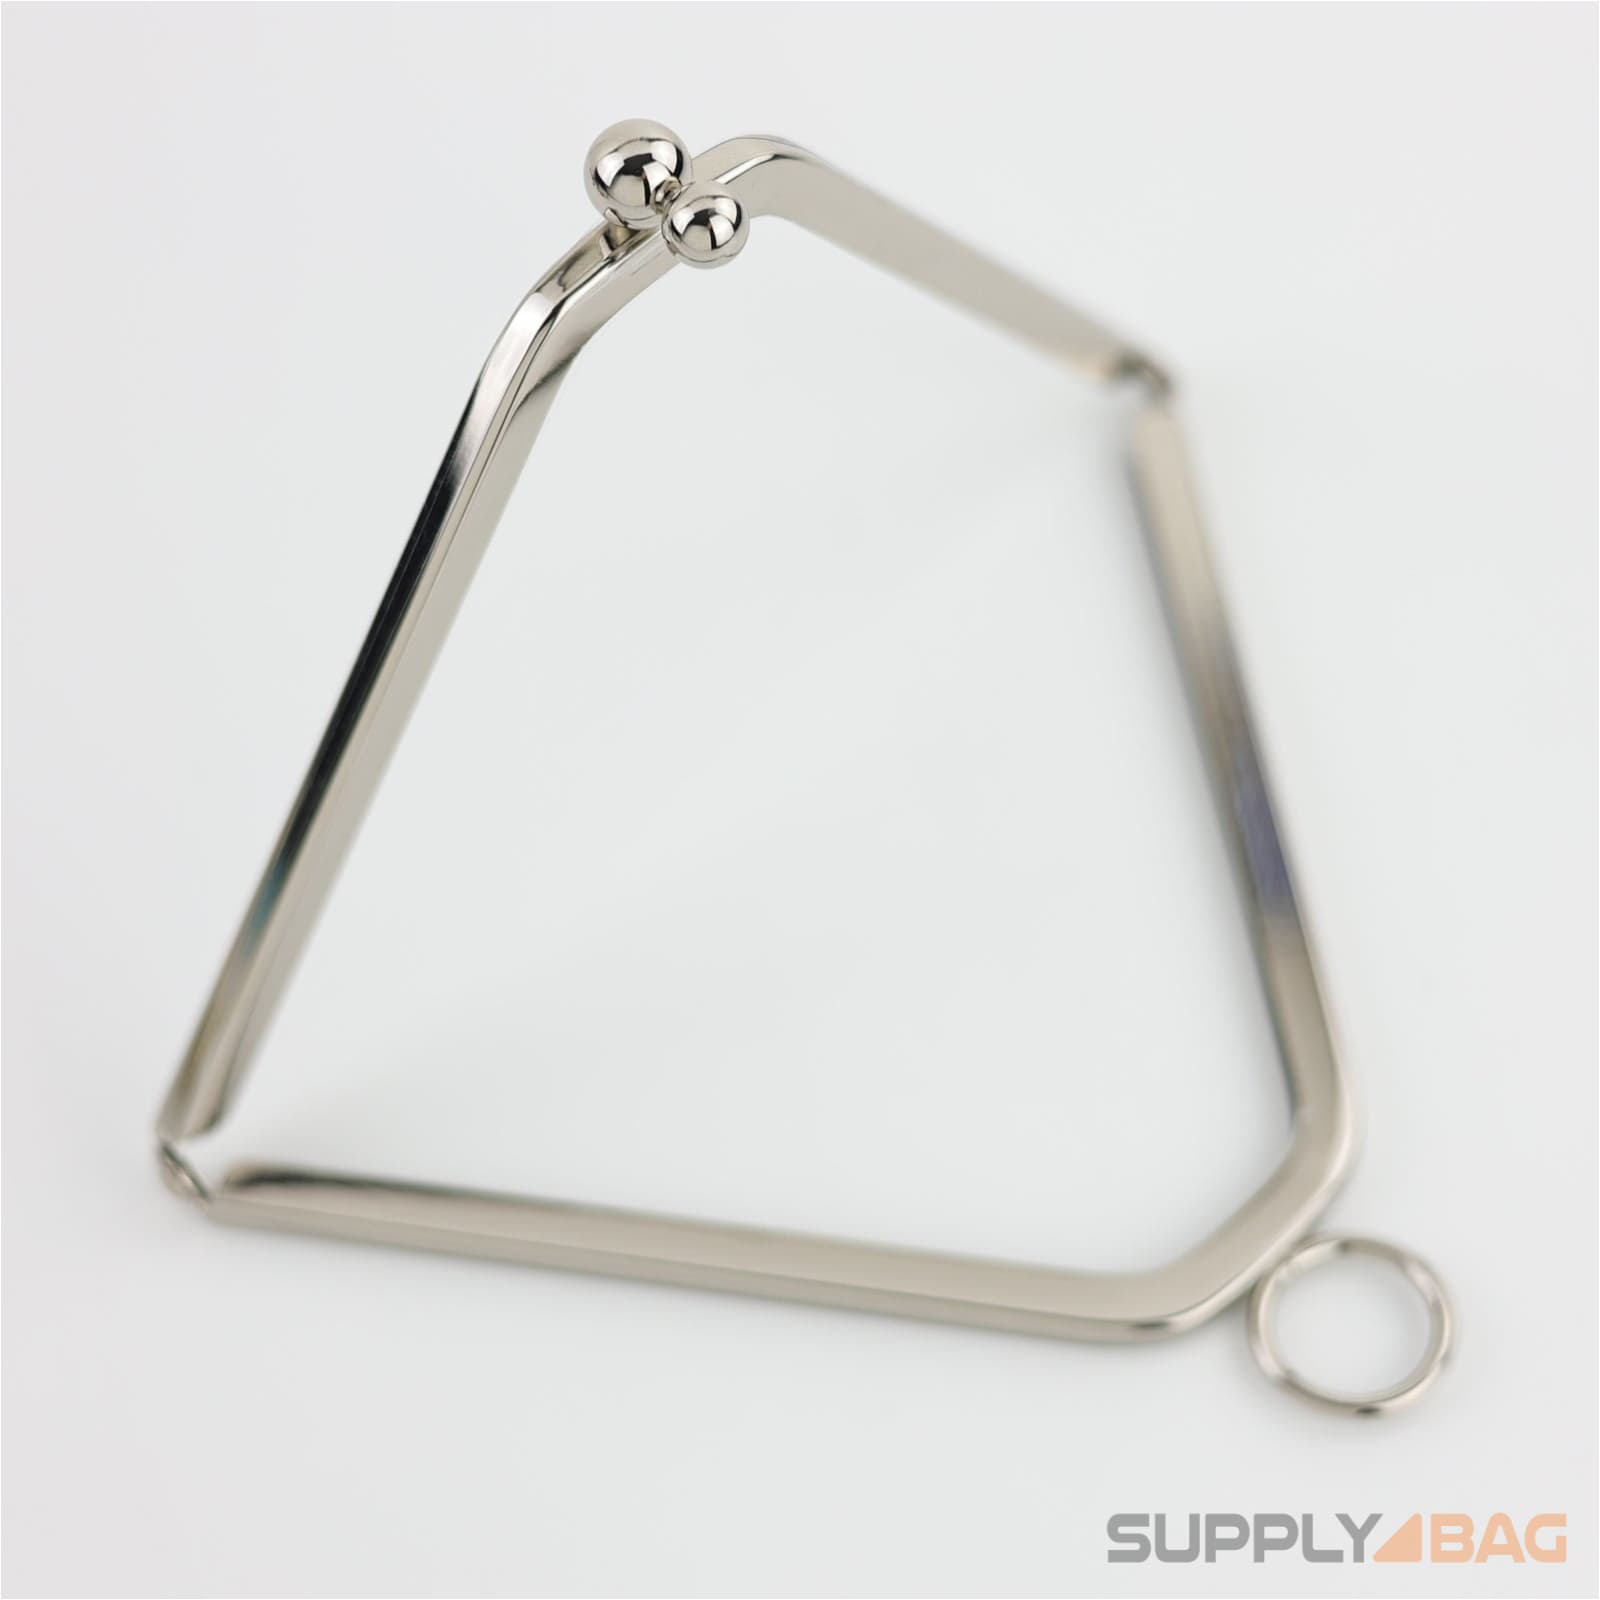 7 1/4 x 4 1/4 inch - O Ring Clasp - Silver Metal Purse Frame